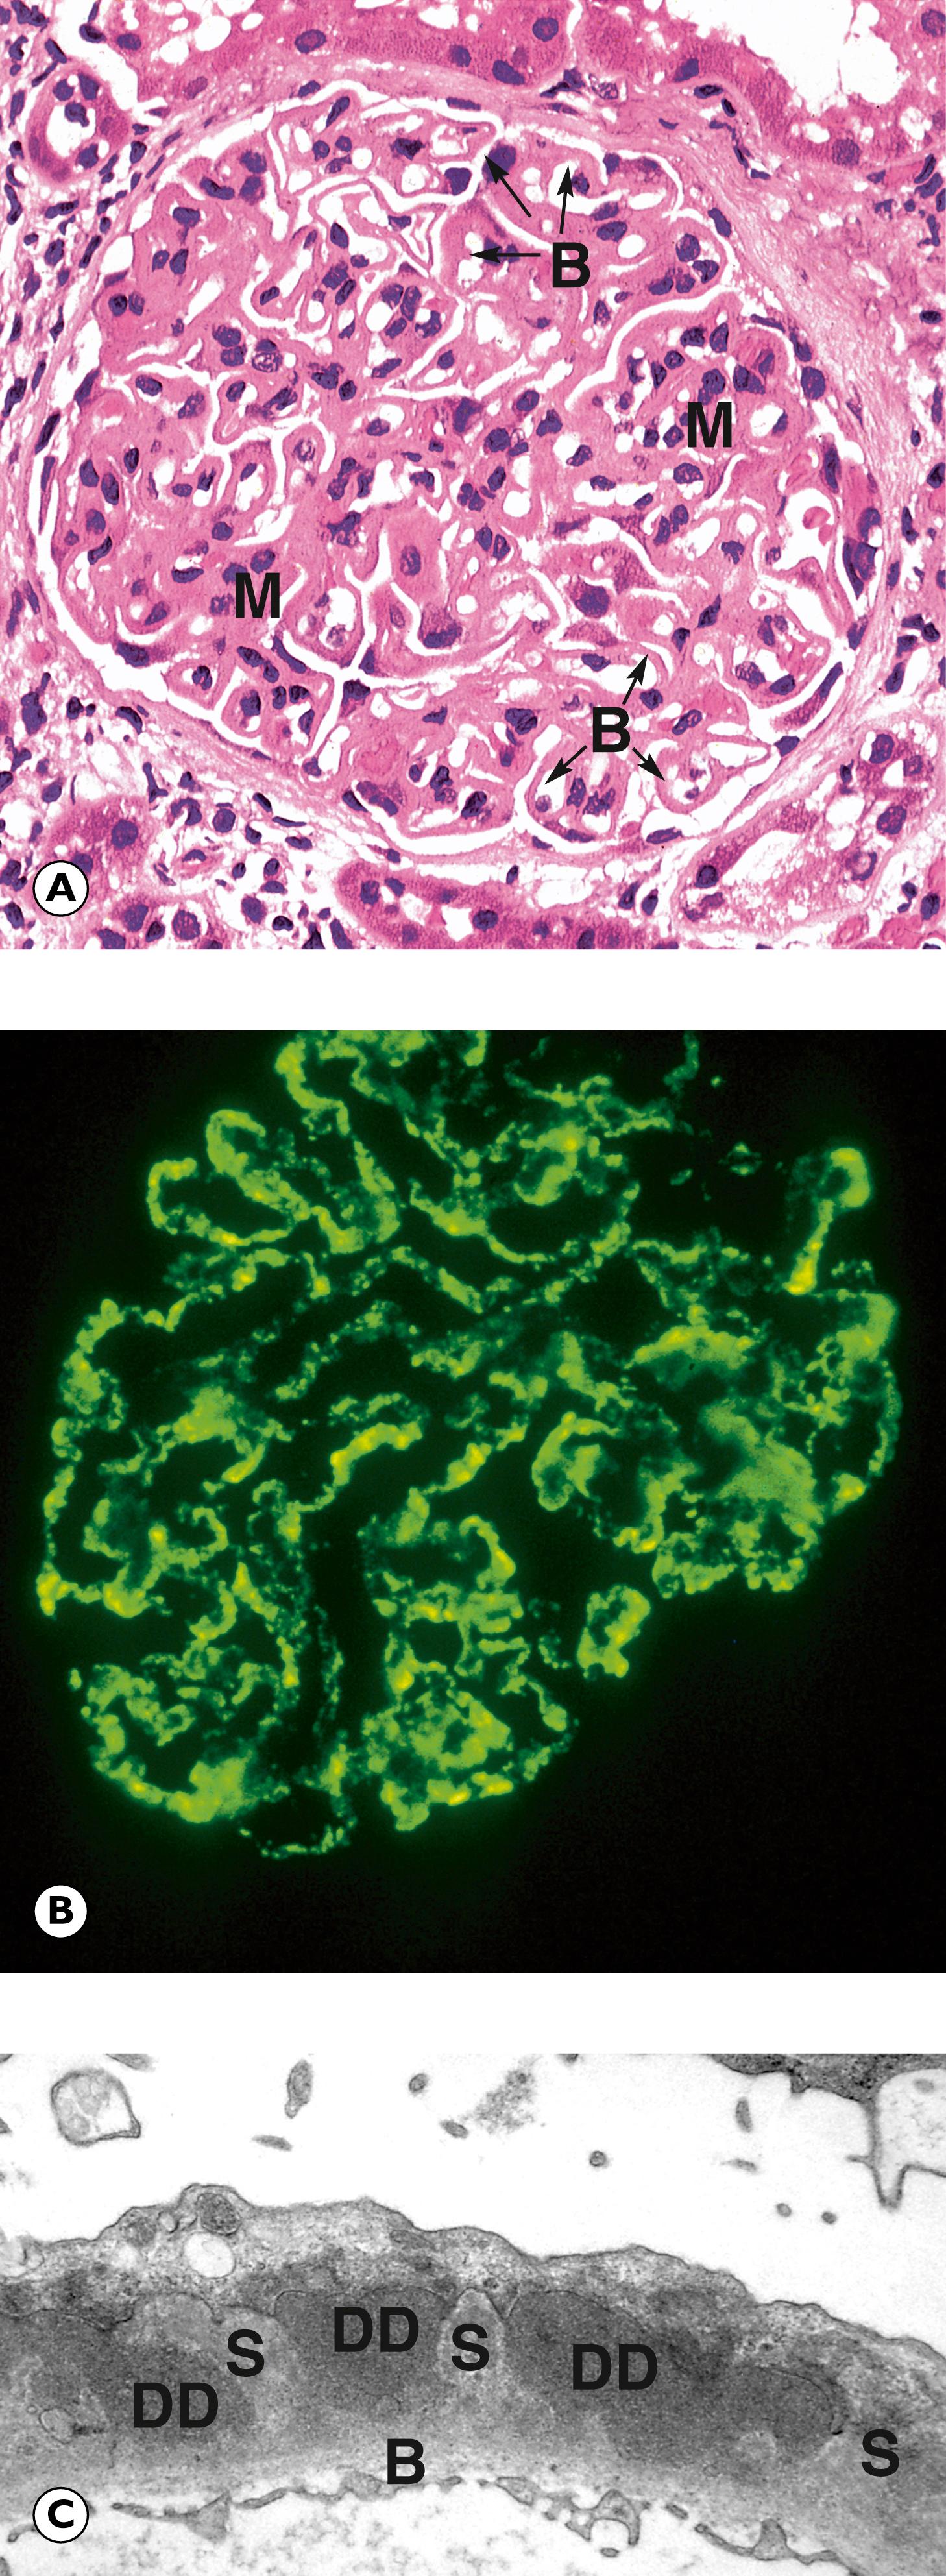 Fig. 15.6, Membranous nephropathy. (A) H&E (HP); (B) IgG immunofluorescence (HP); (C) EM.